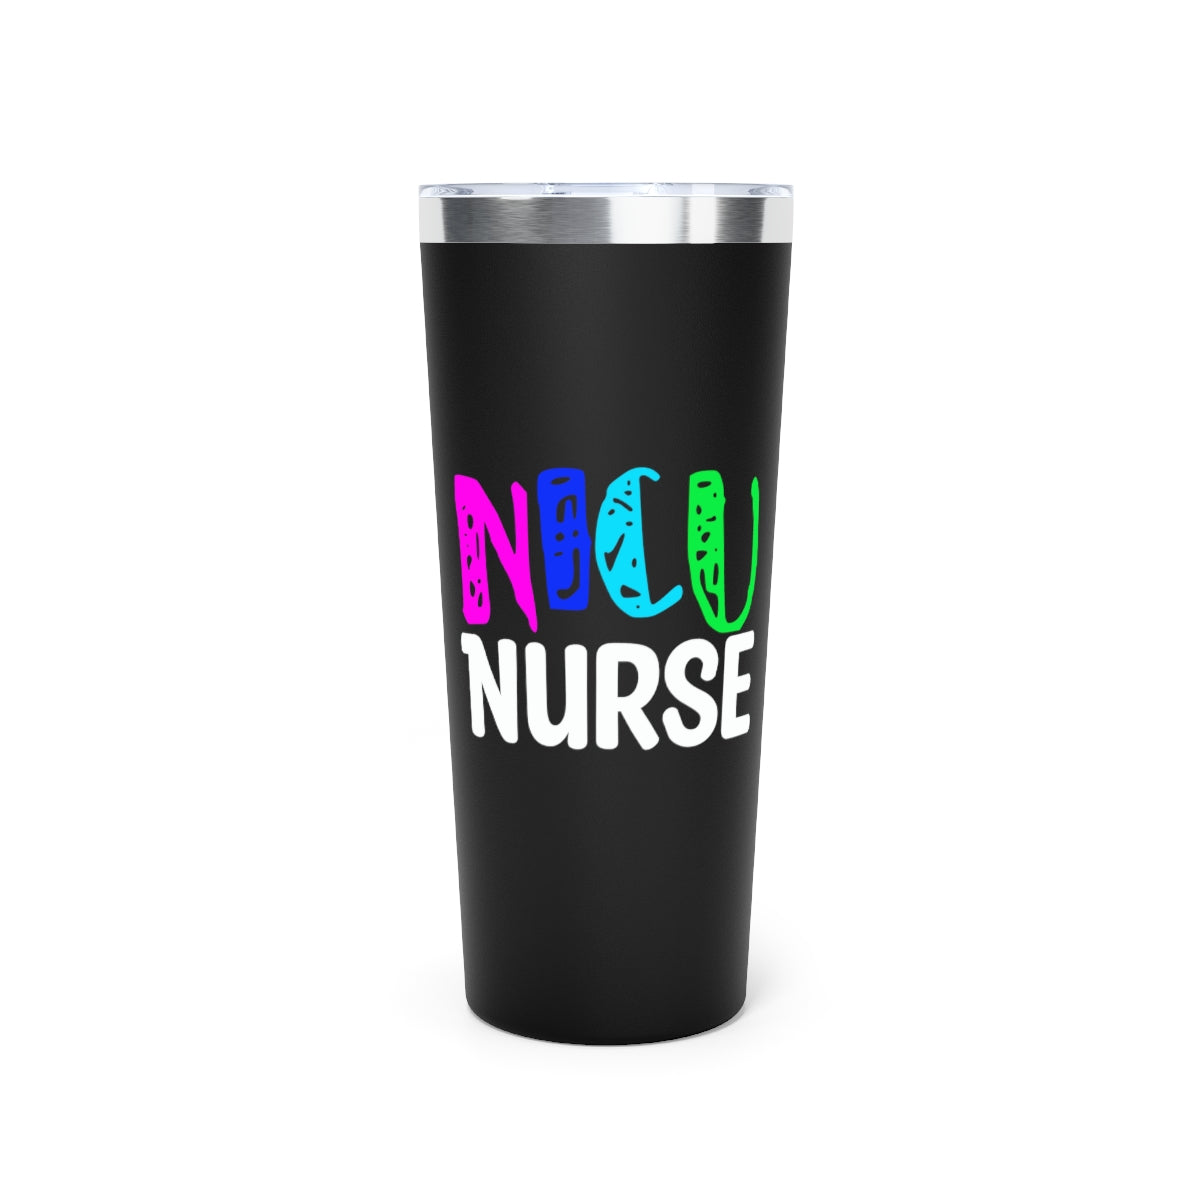 NICU Nurse Copper Vacuum Insulated Tumbler, 22oz